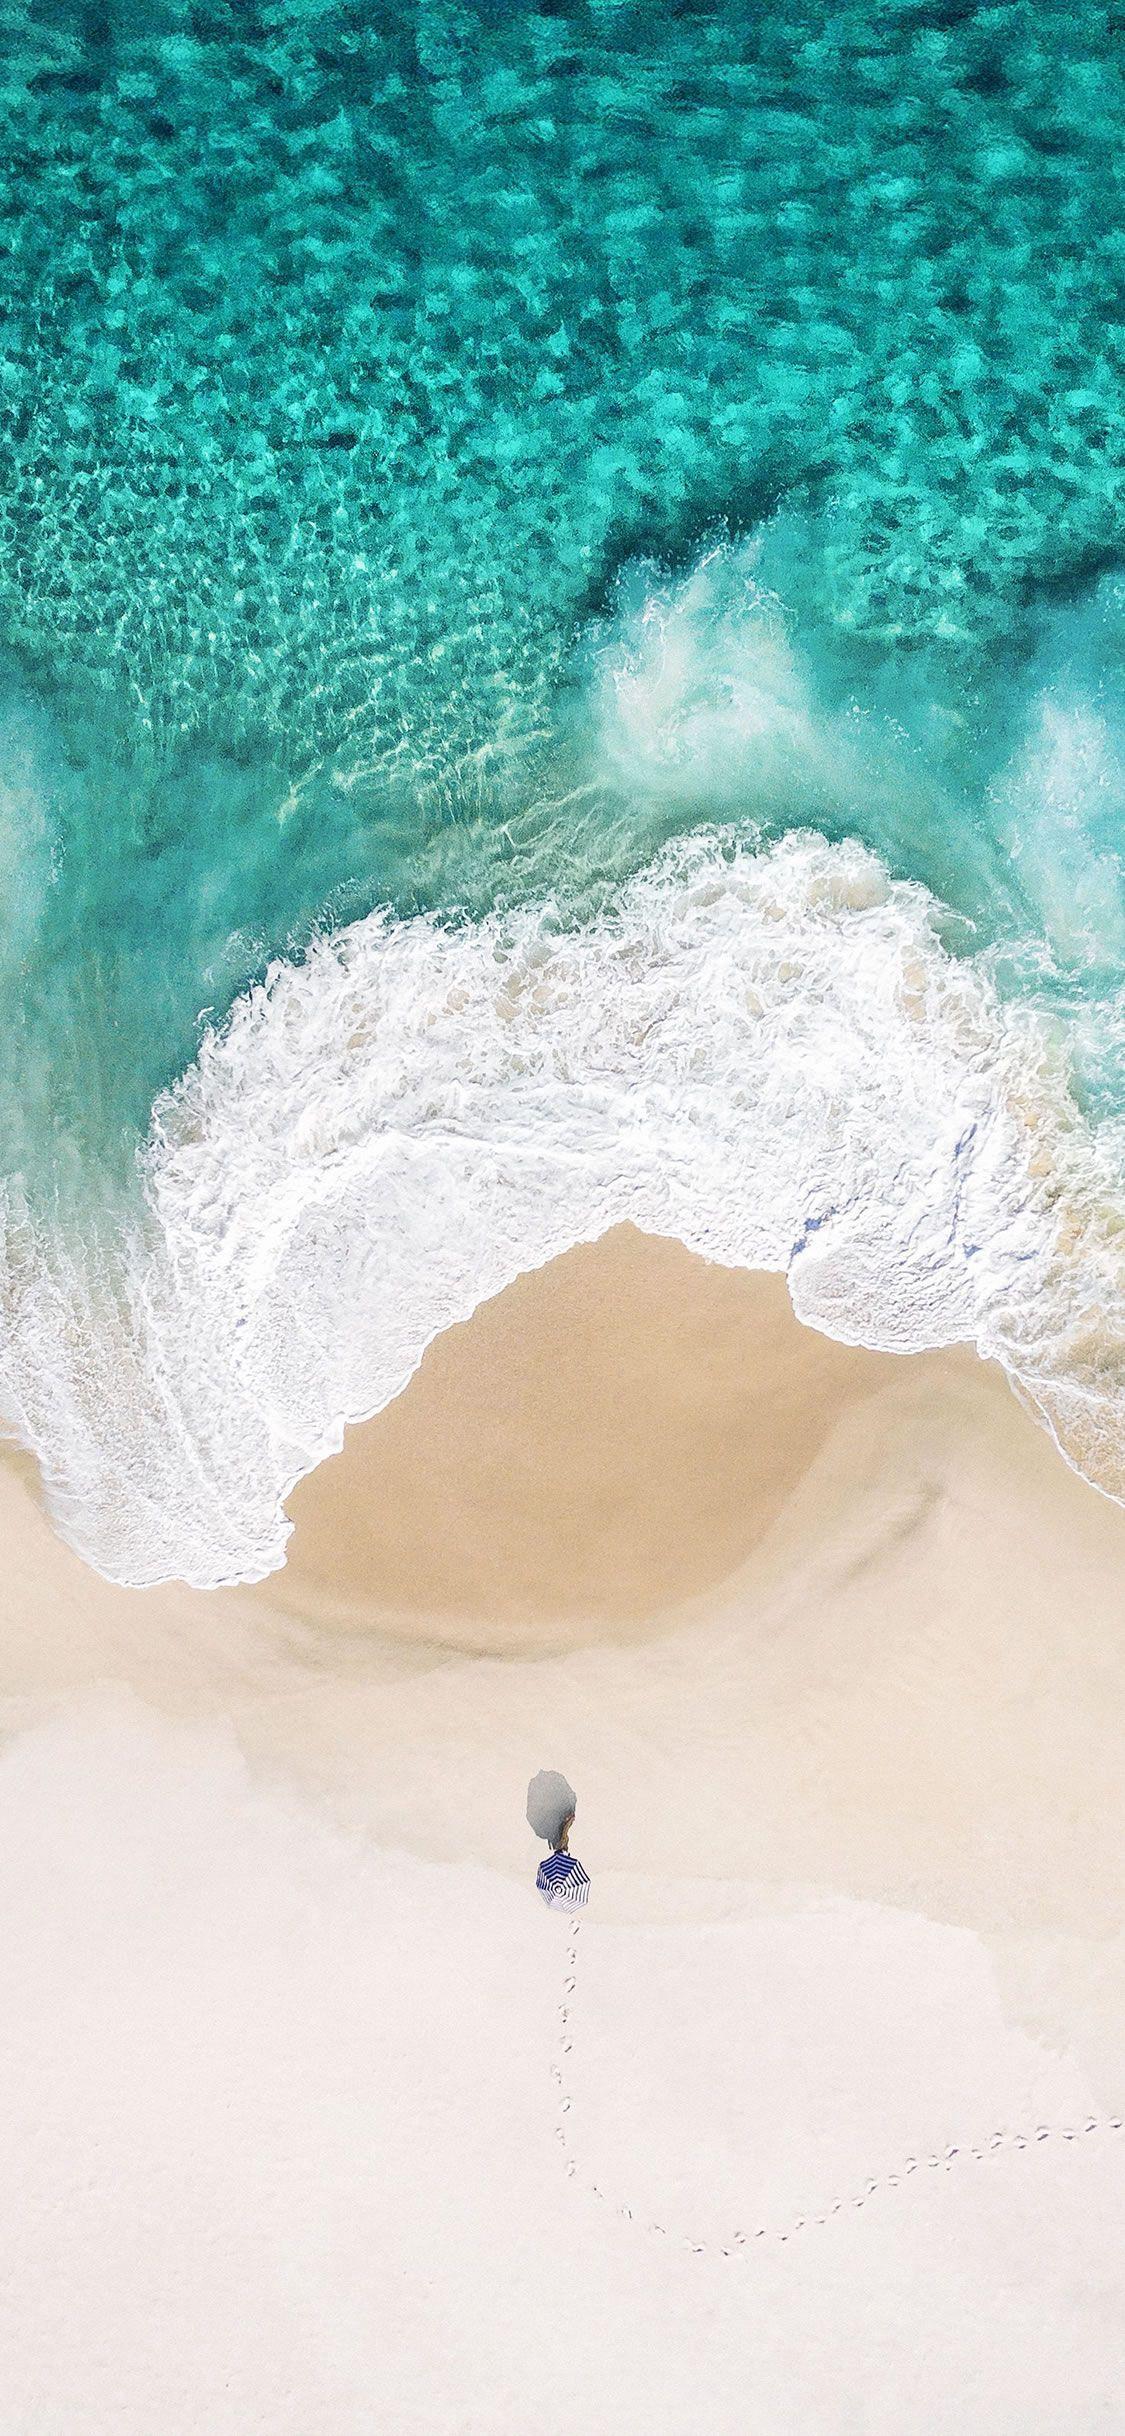 Ocean iPhone Wallpapers - Top Free Ocean iPhone ...